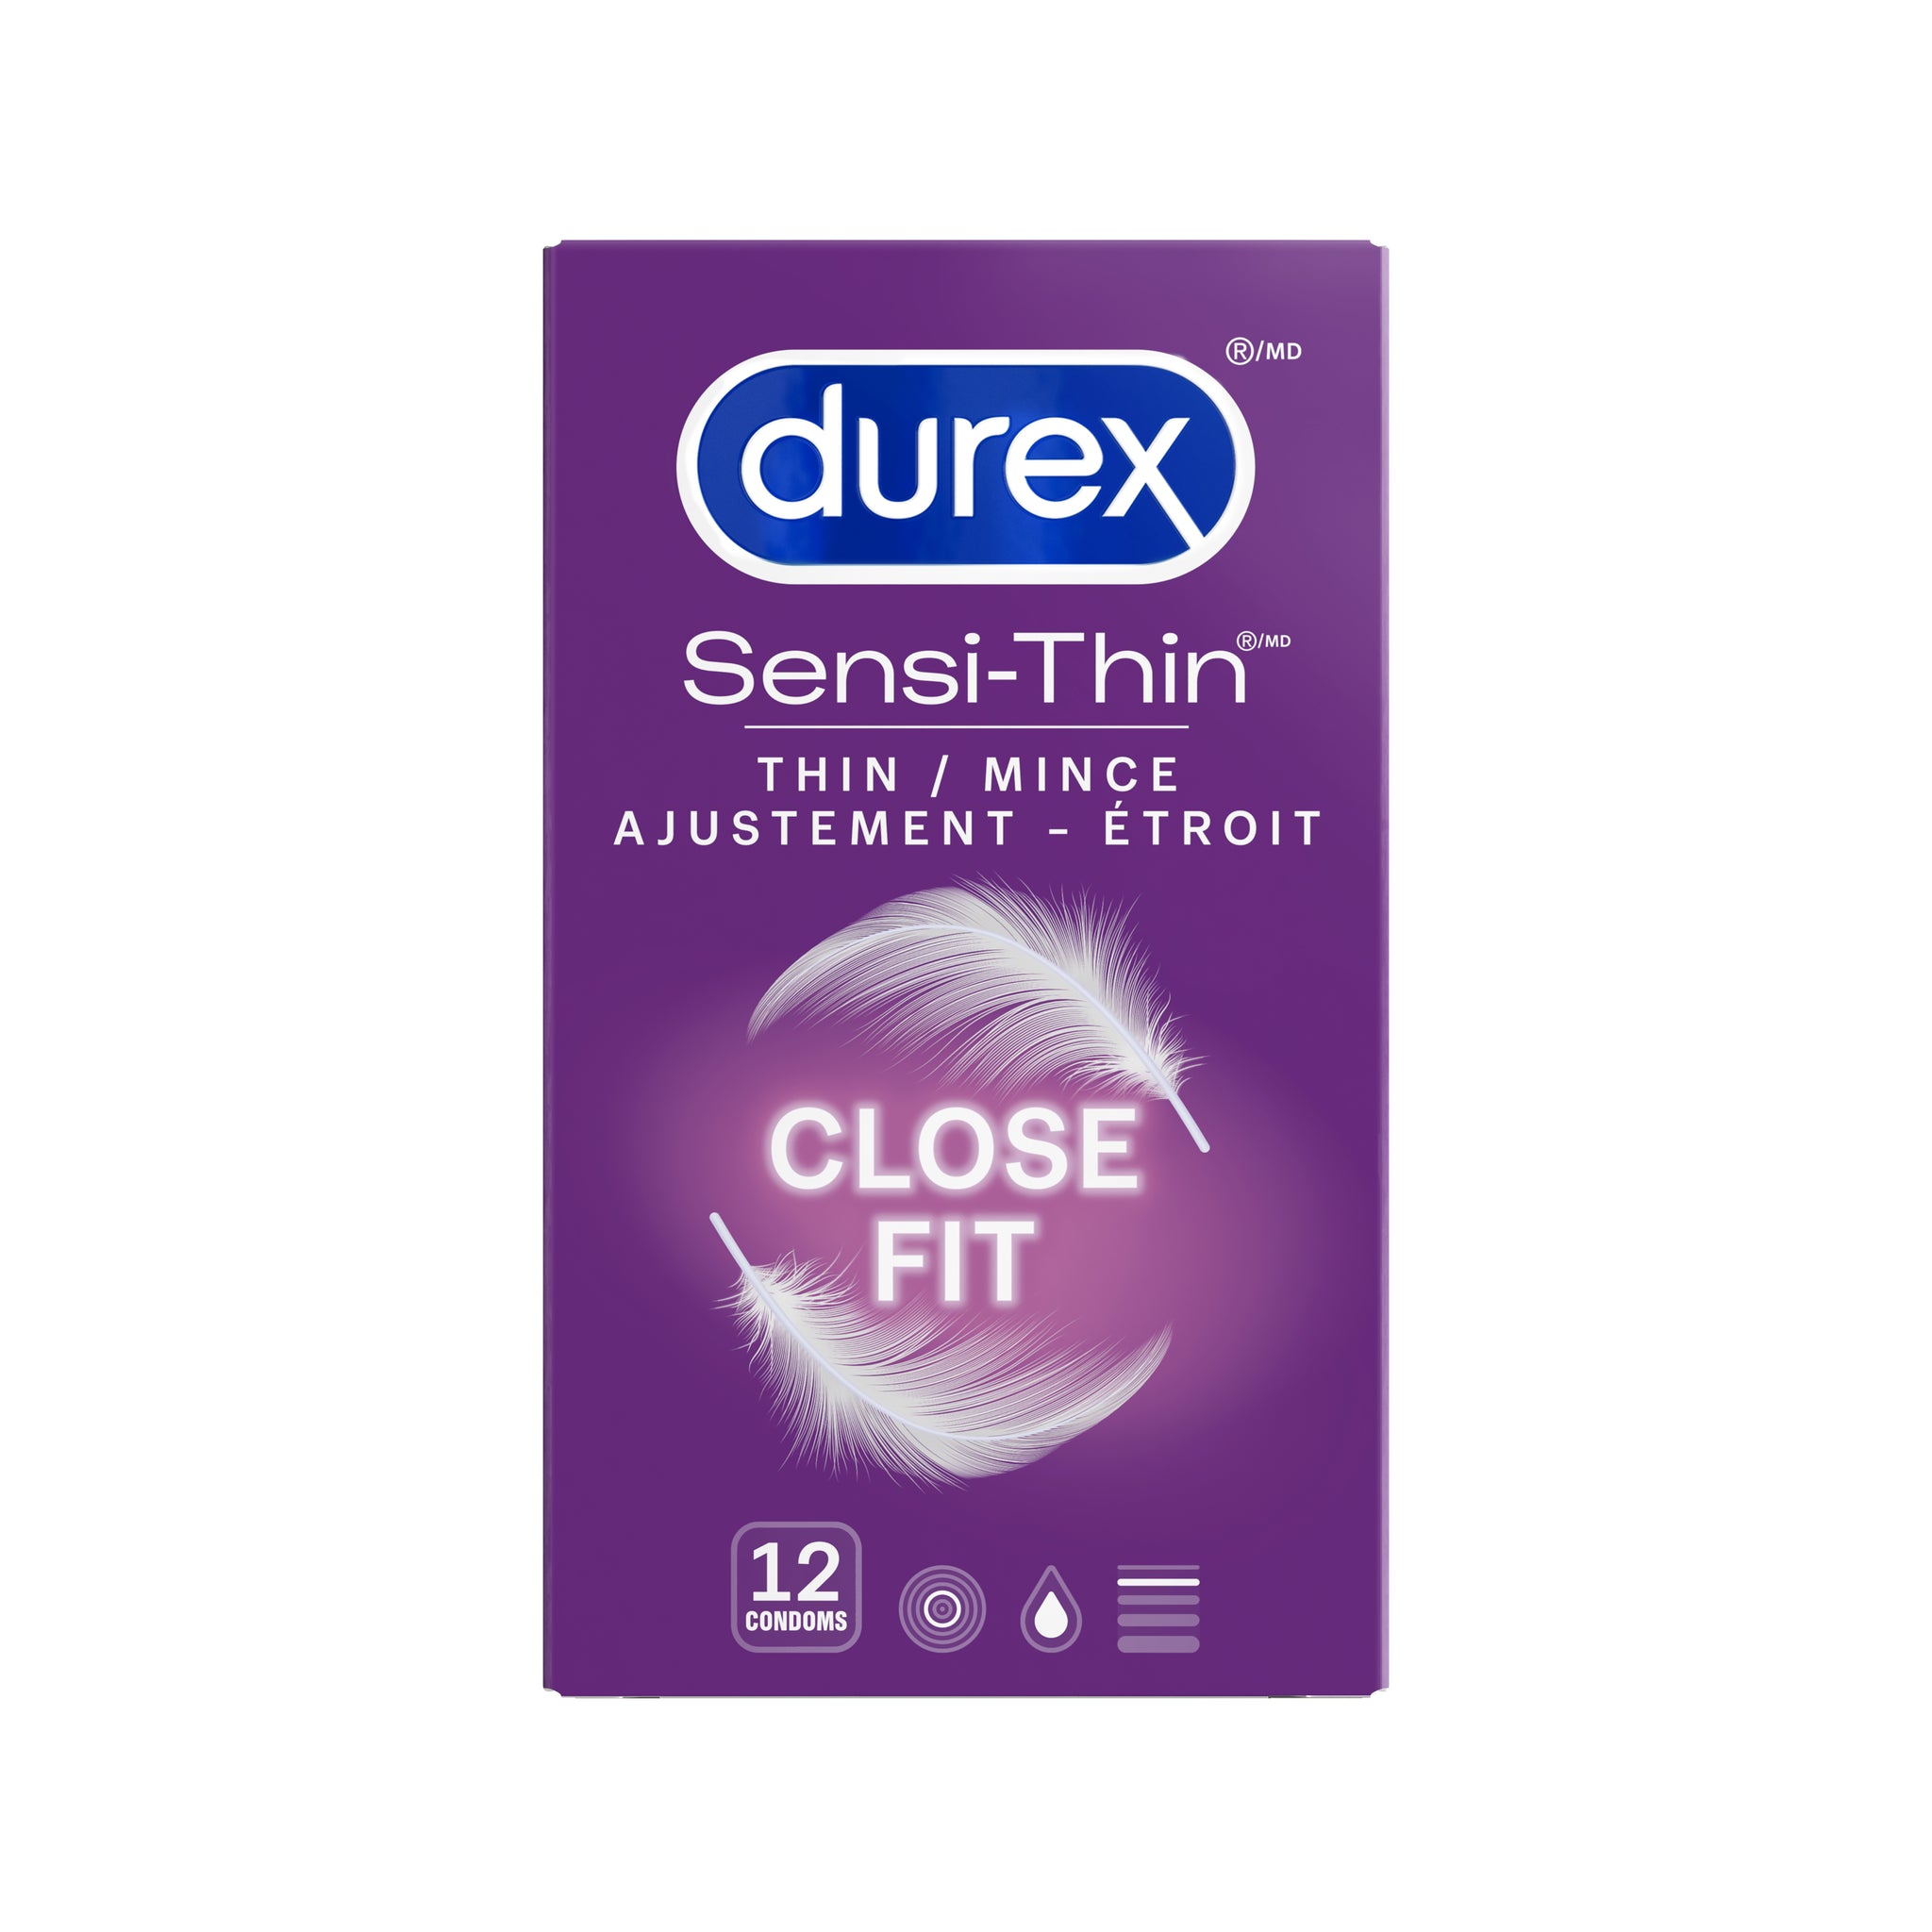 packshot of Durex Sensi-Thin Ajustement étroit